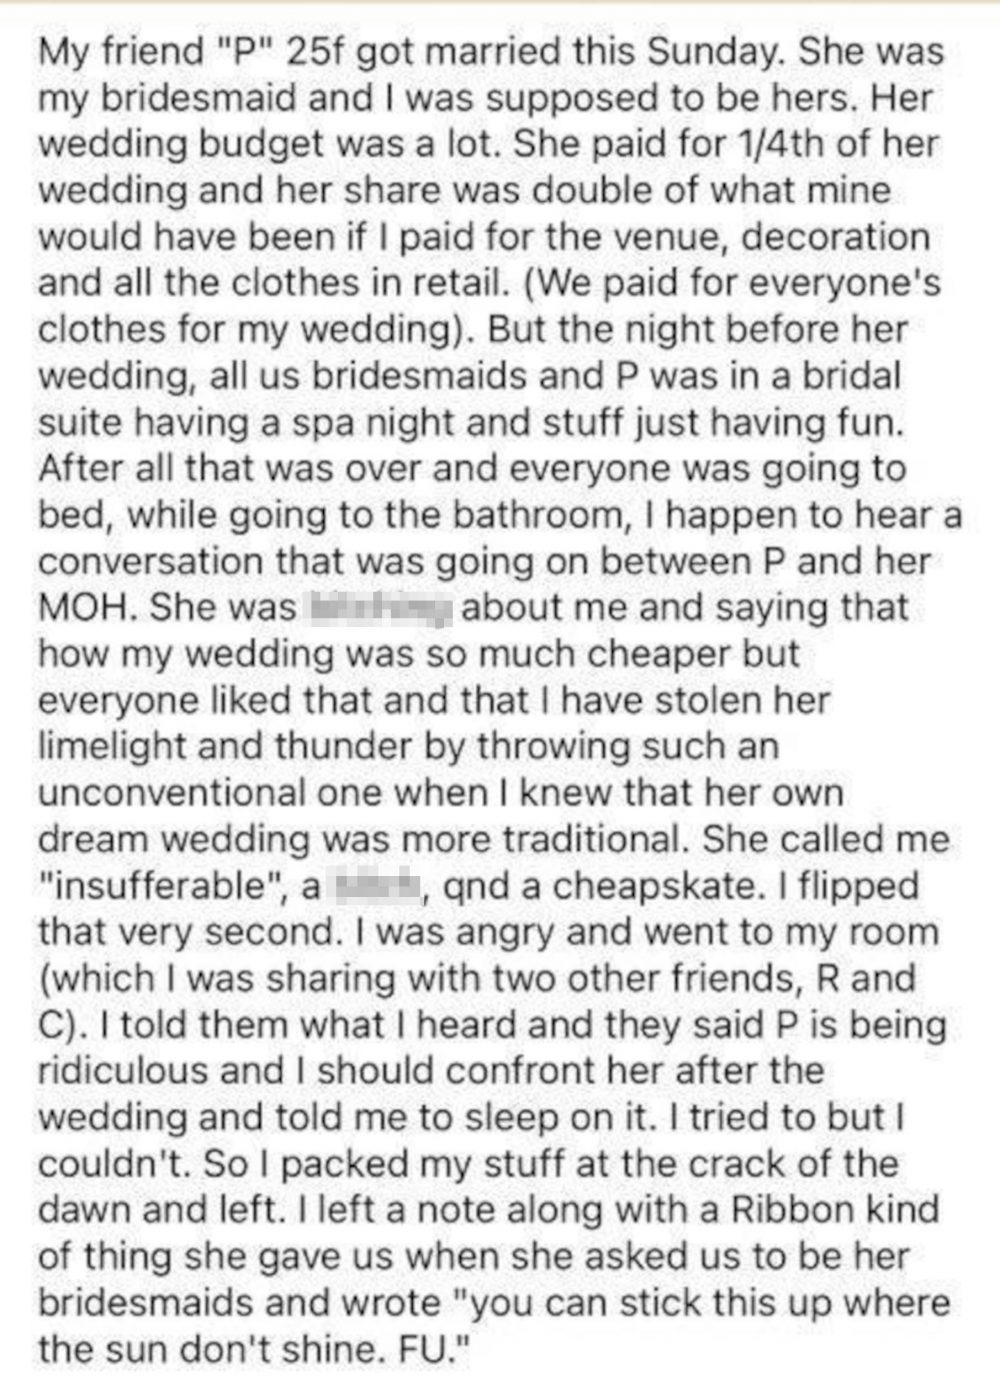 Friend having traditional wedding - wedding news